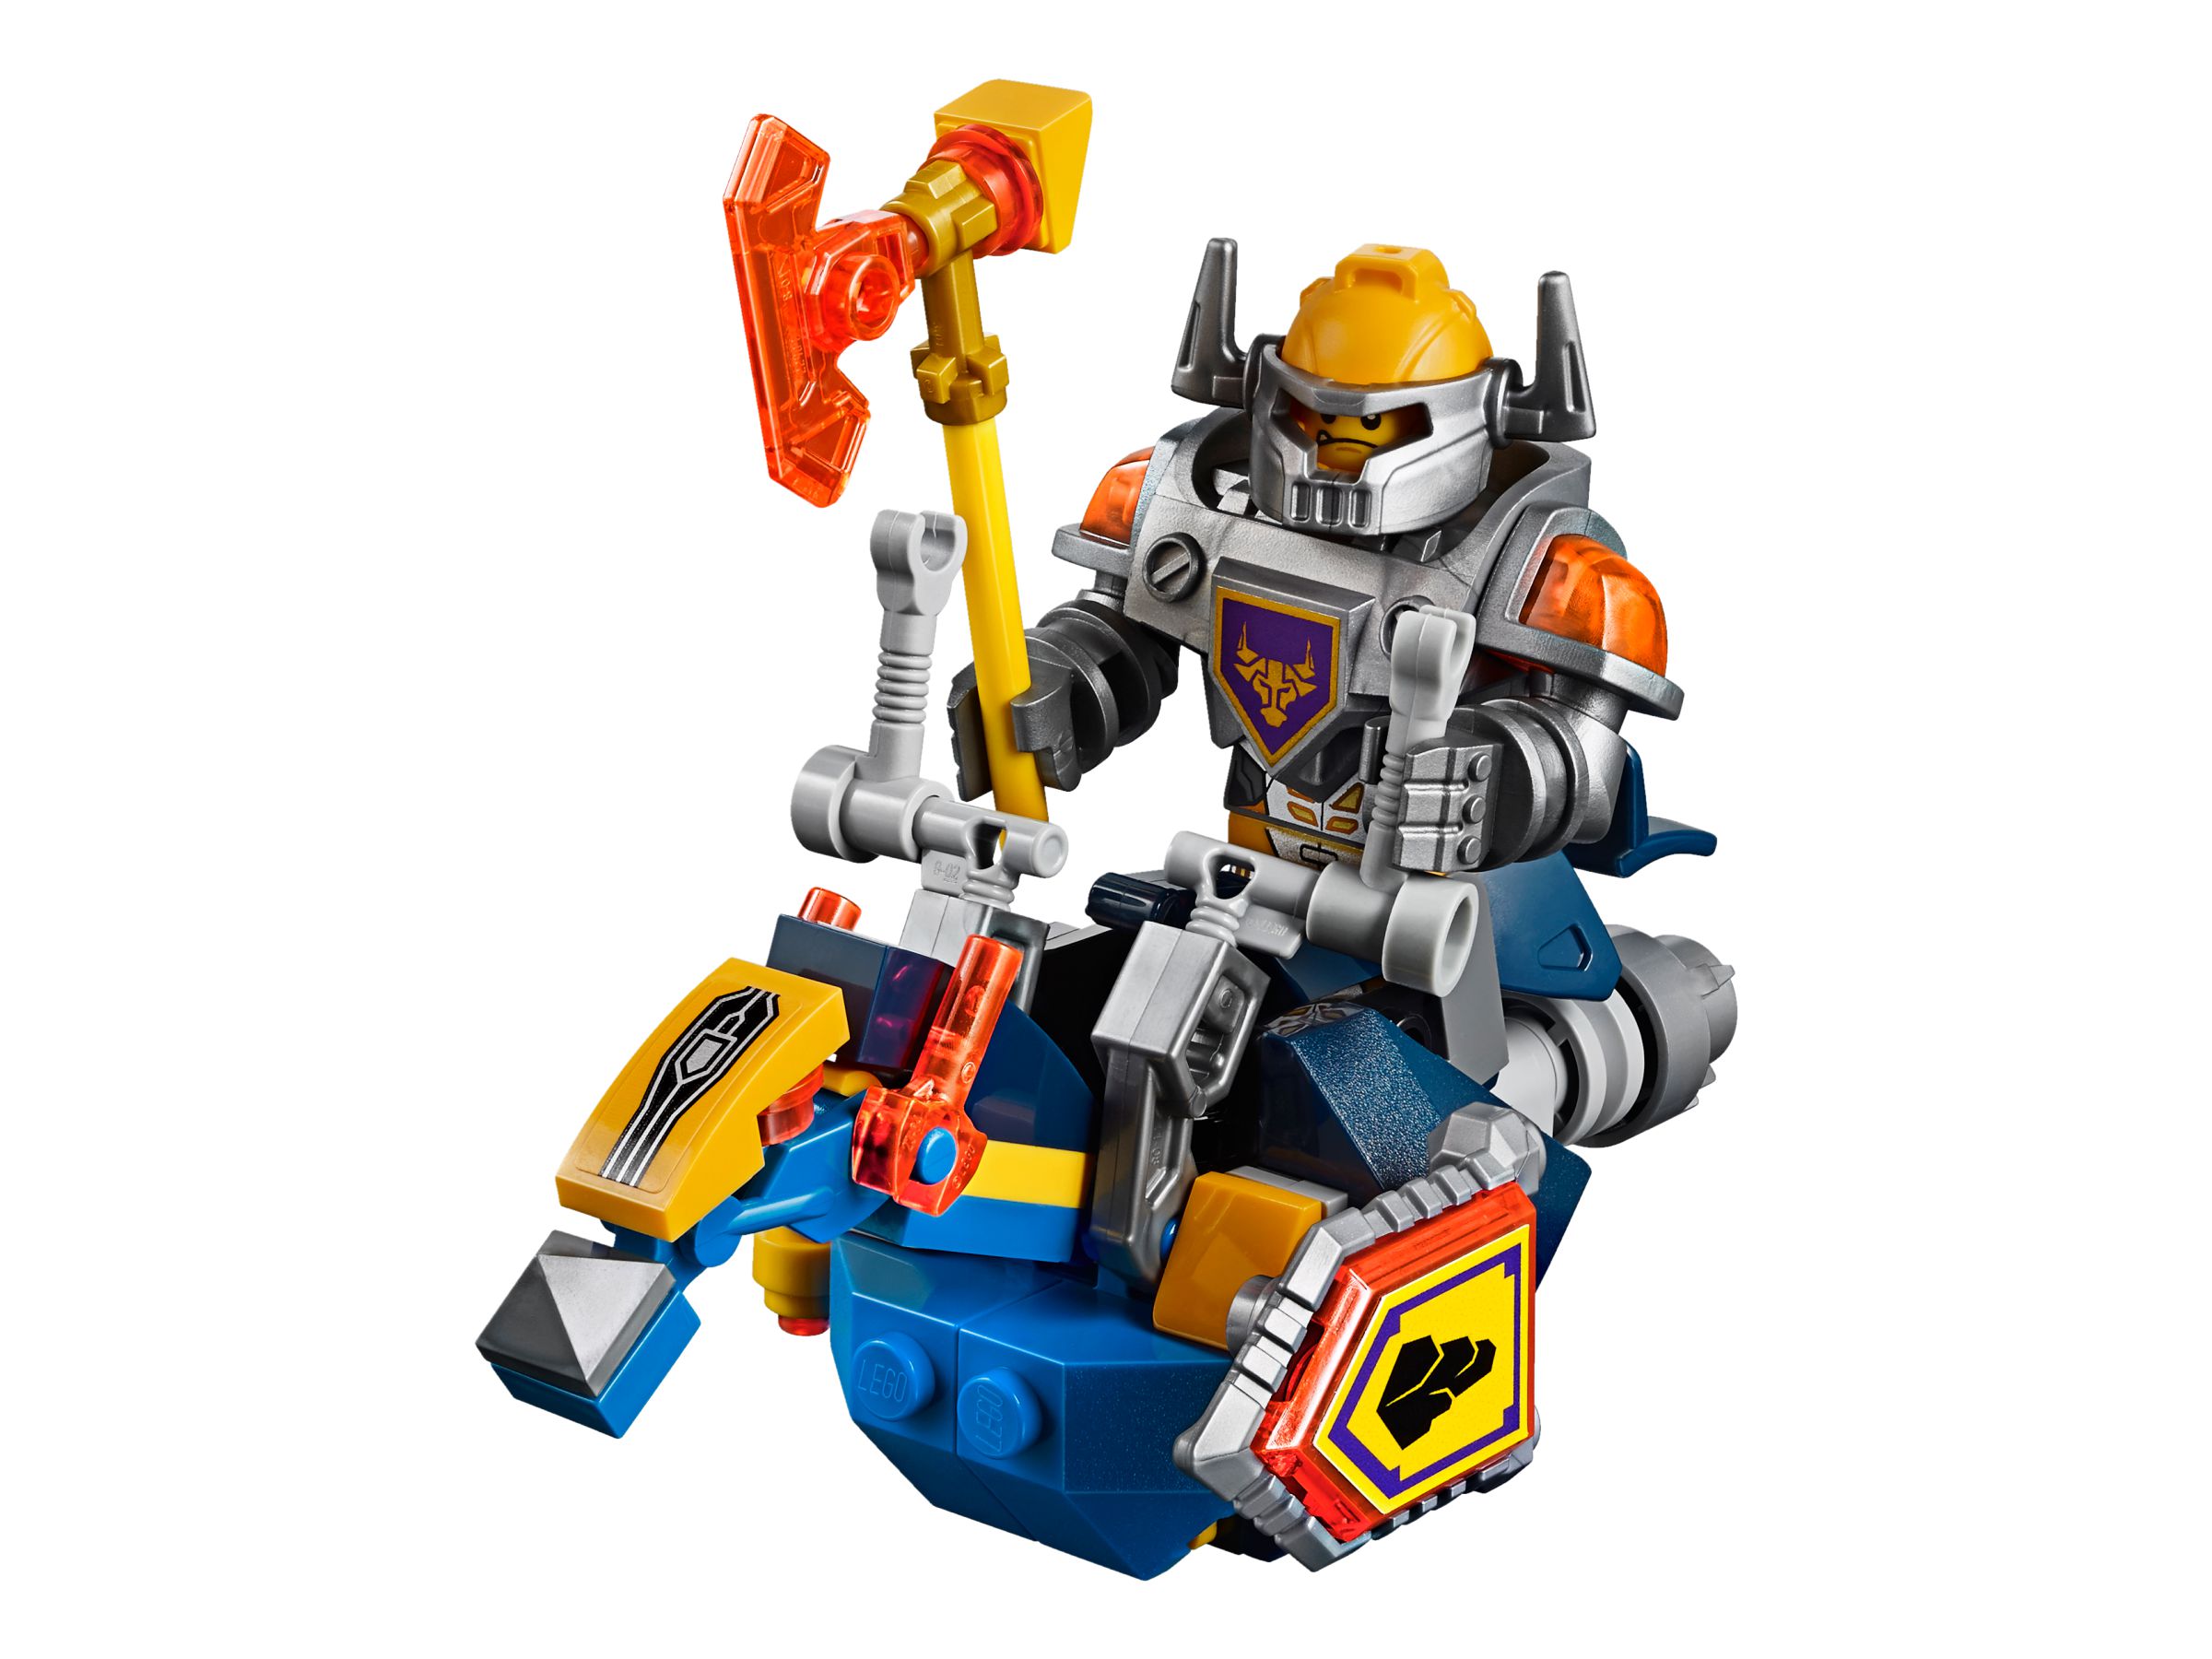 LEGO Nexo Knights 70323 Jestros Vulkanfestung LEGO_70323_alt7.jpg